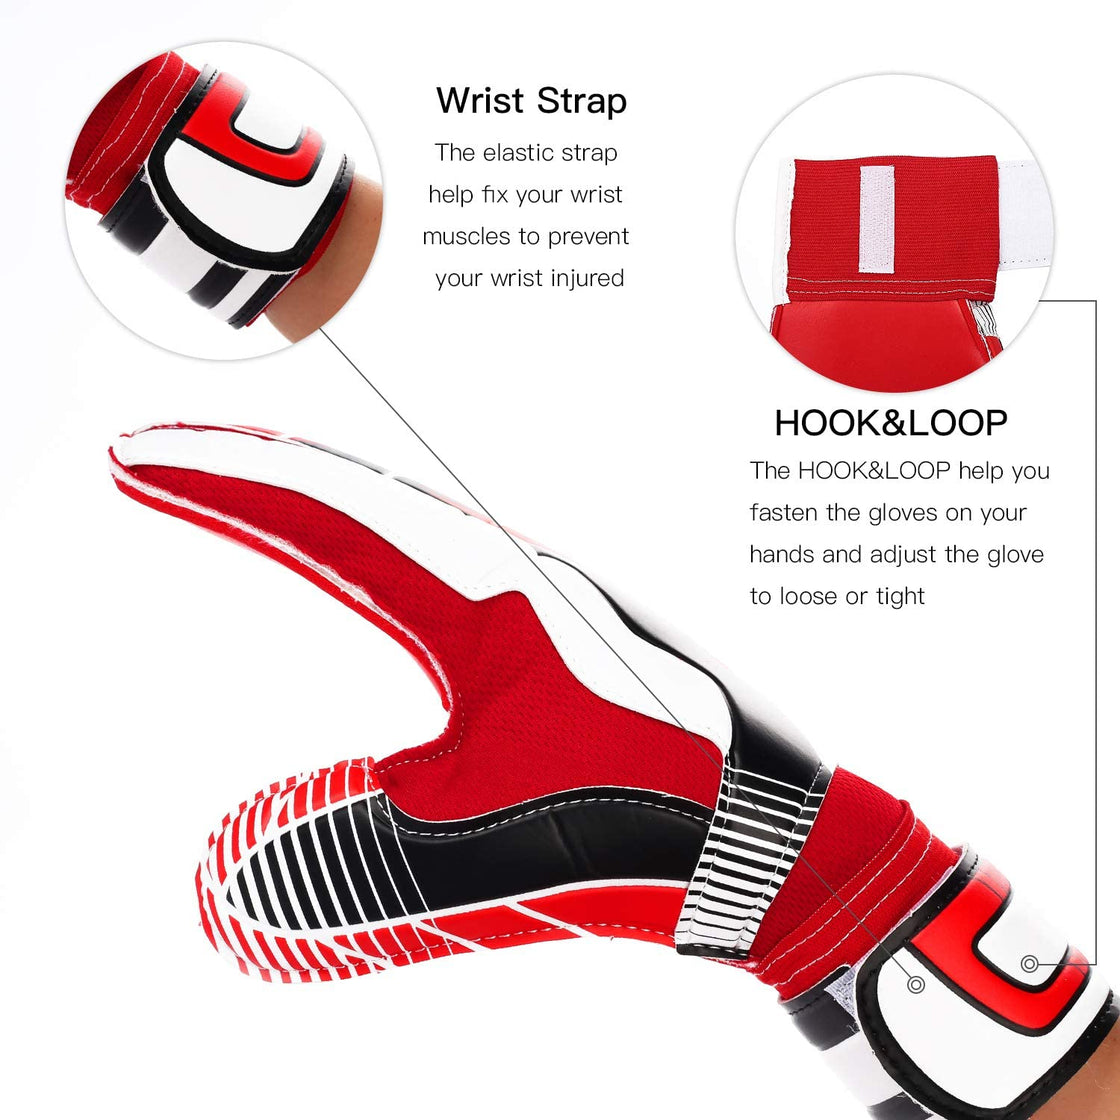 Brace Master Goalie Gloves for training and match